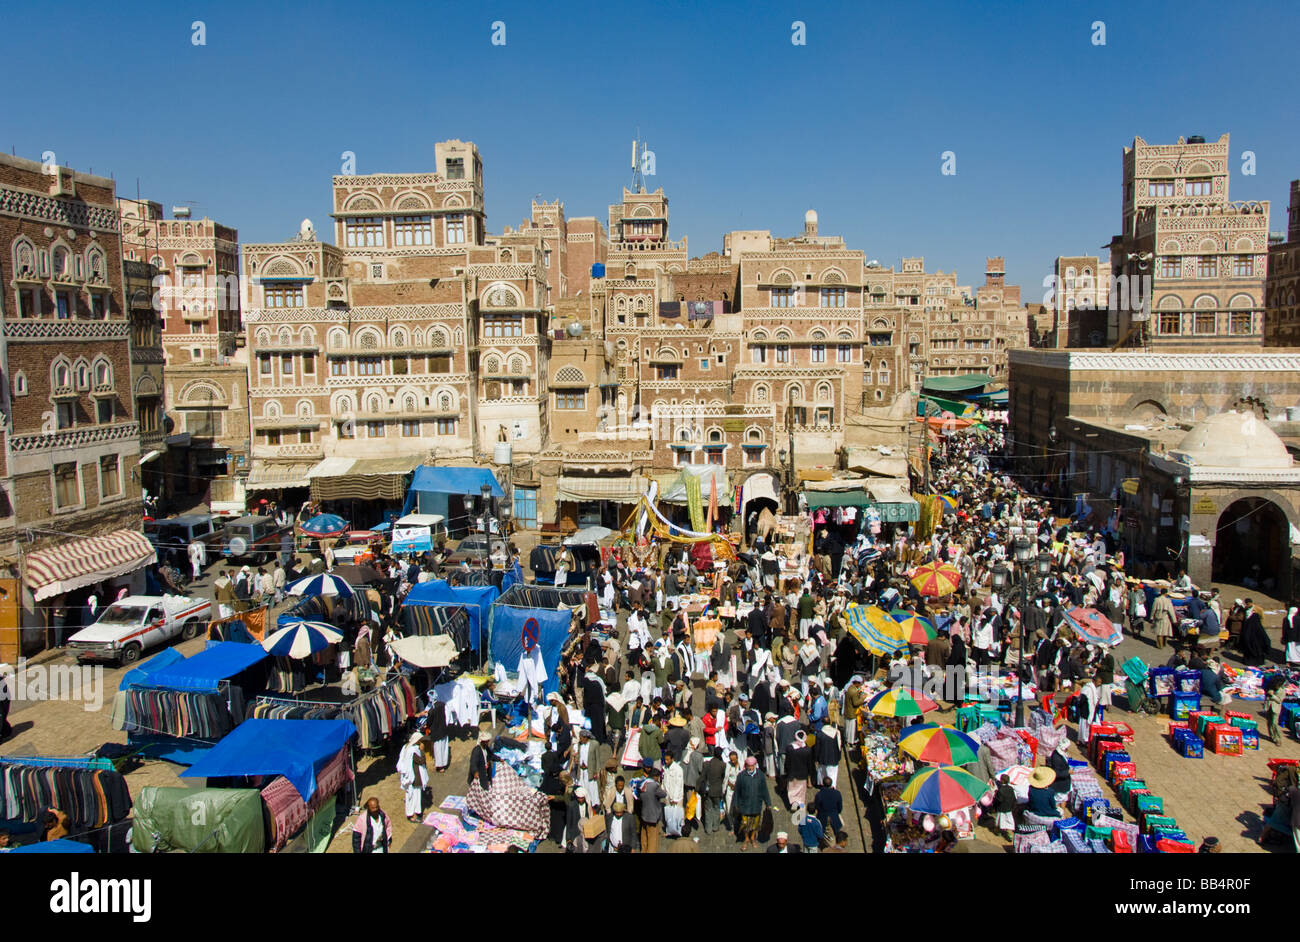 Bab Al Yemen market in the old town district of Sana'a Yemen Stock Photo